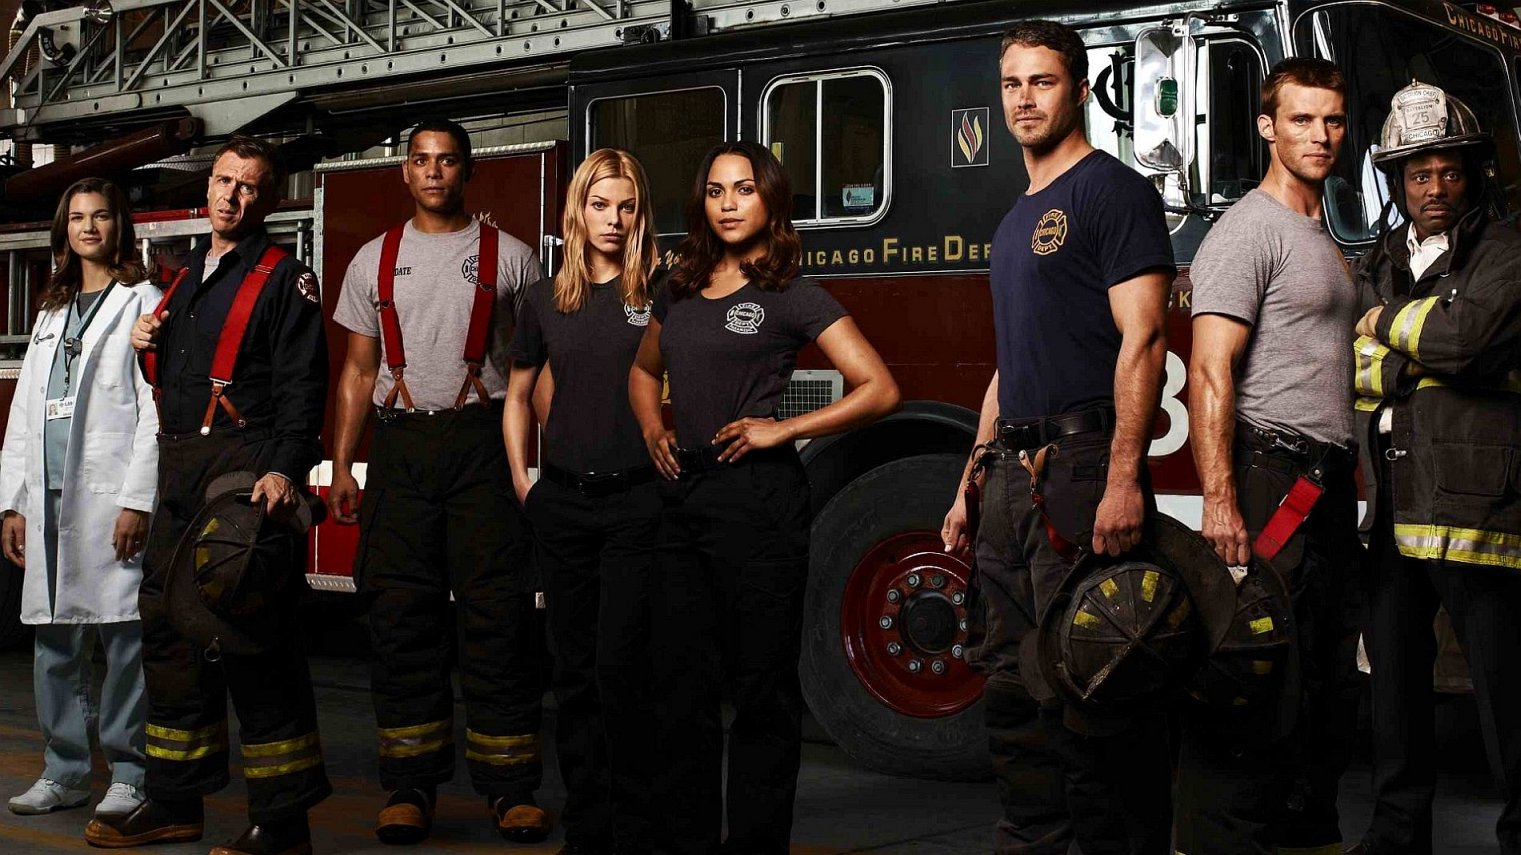 cast of Chicago Fire season 5